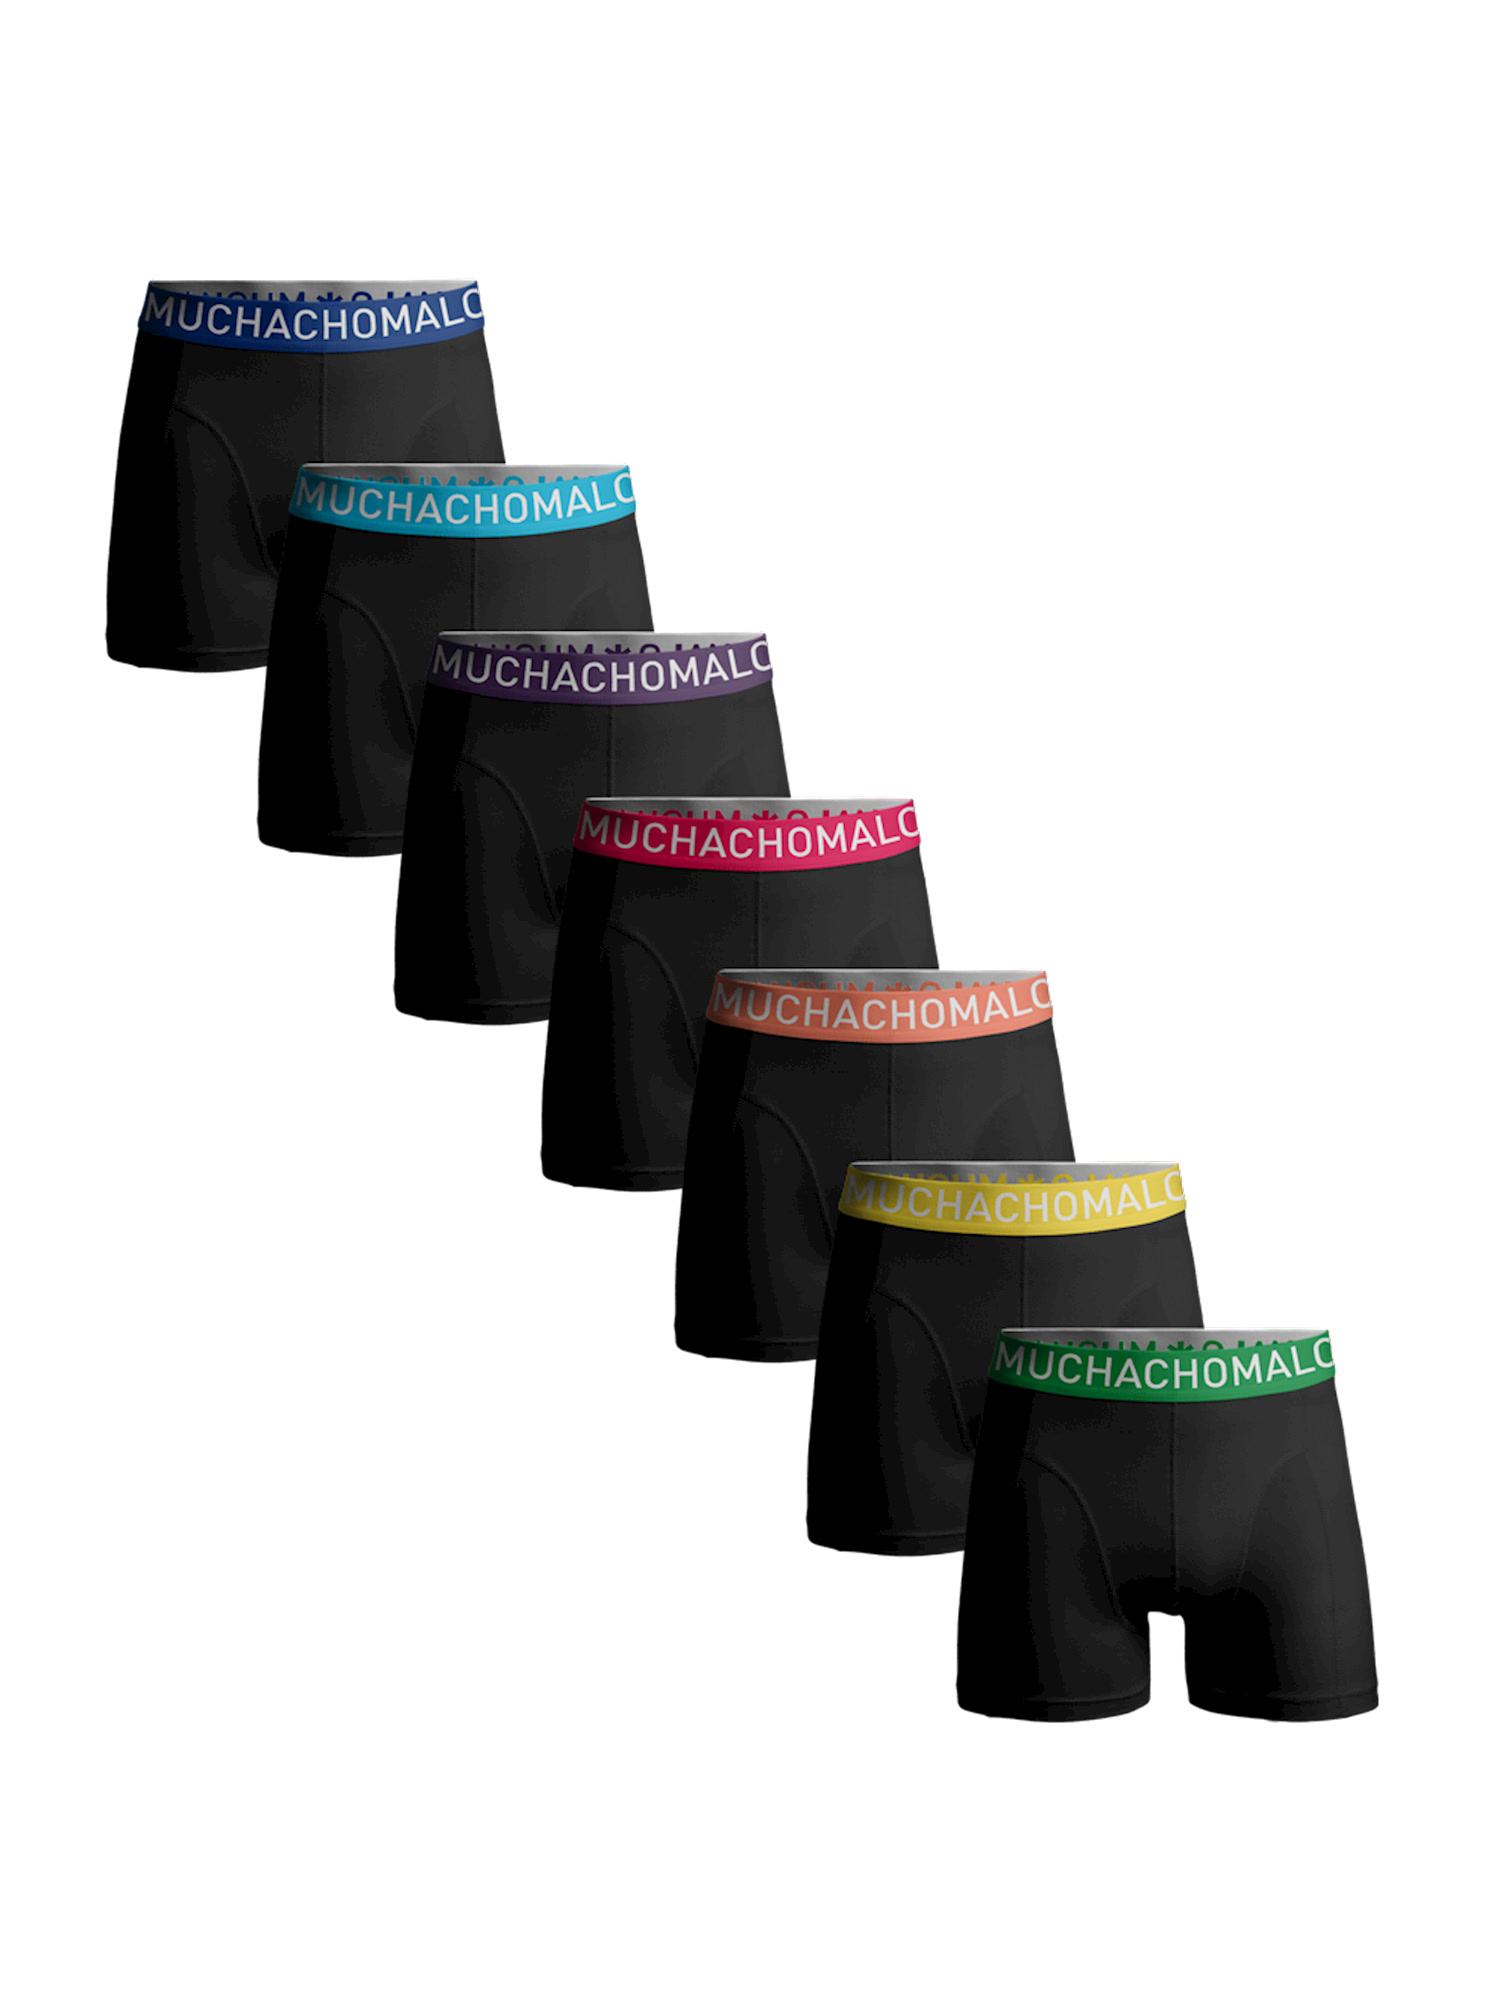 Боксеры Muchachomalo 7er-Set: Boxershorts, цвет Black/Black/Black/Black/Black/Black/Black цена и фото